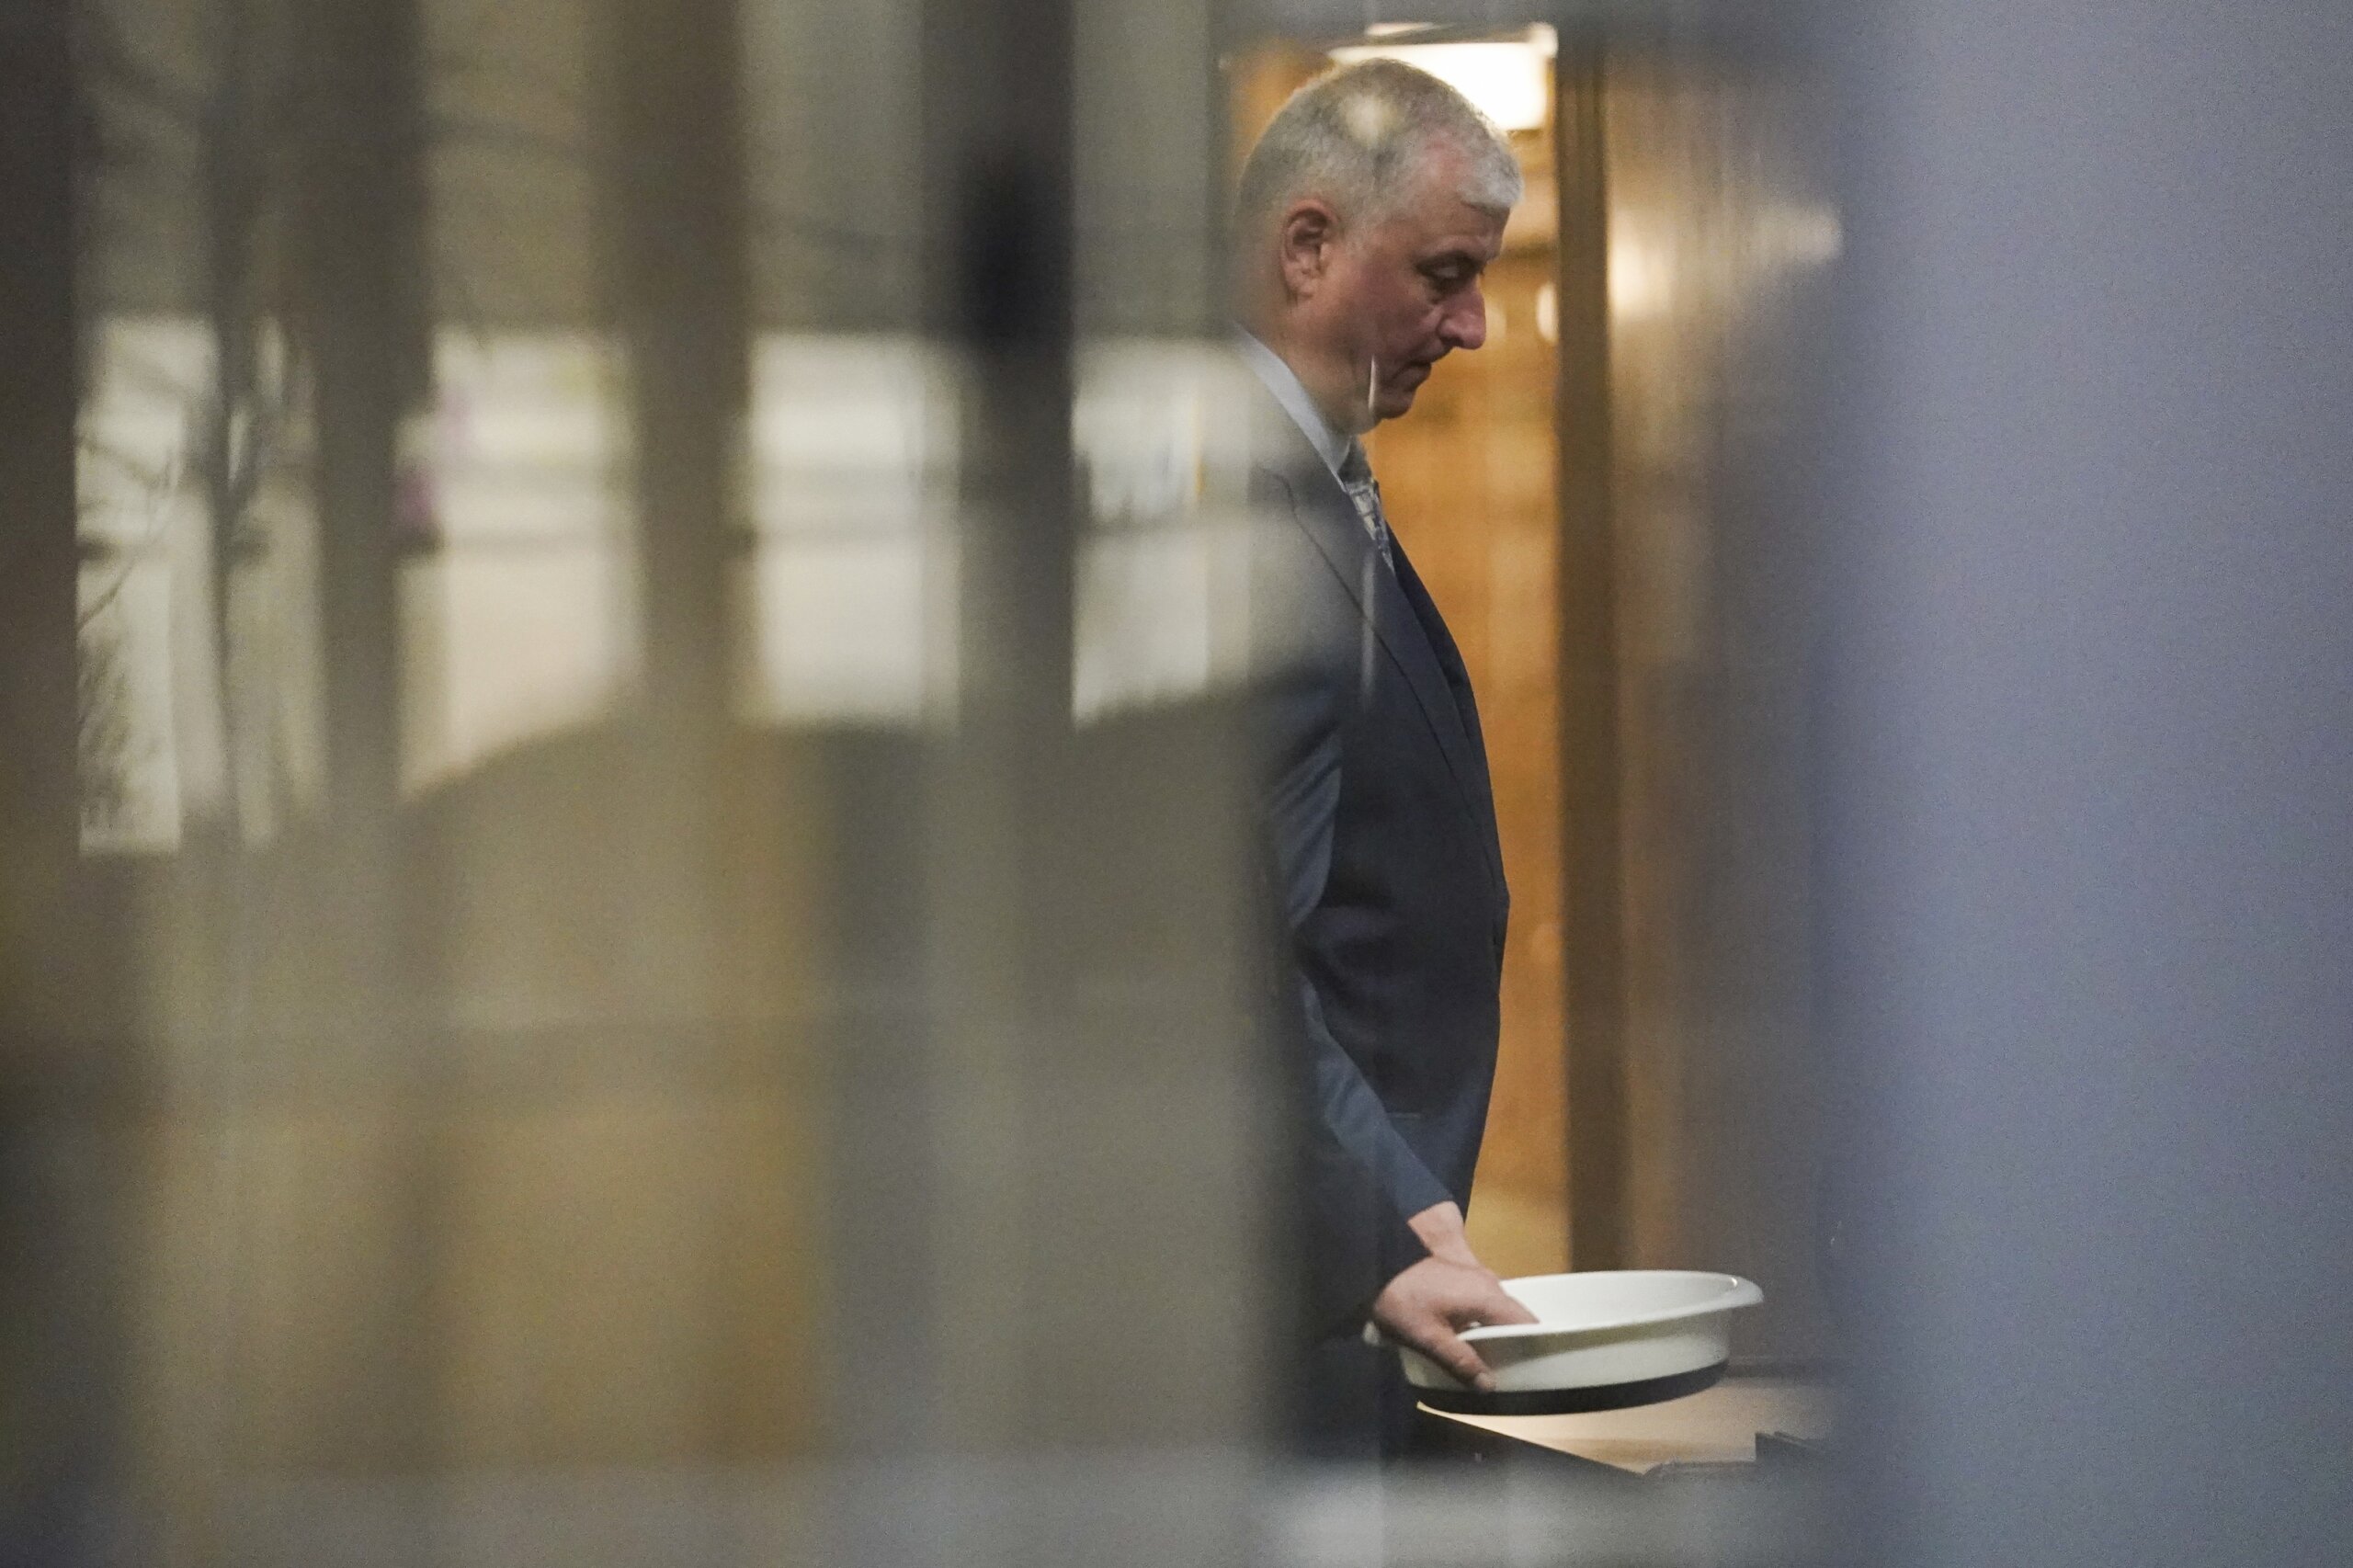 Bribery trial of ex-Ohio House speaker to begin in earnest